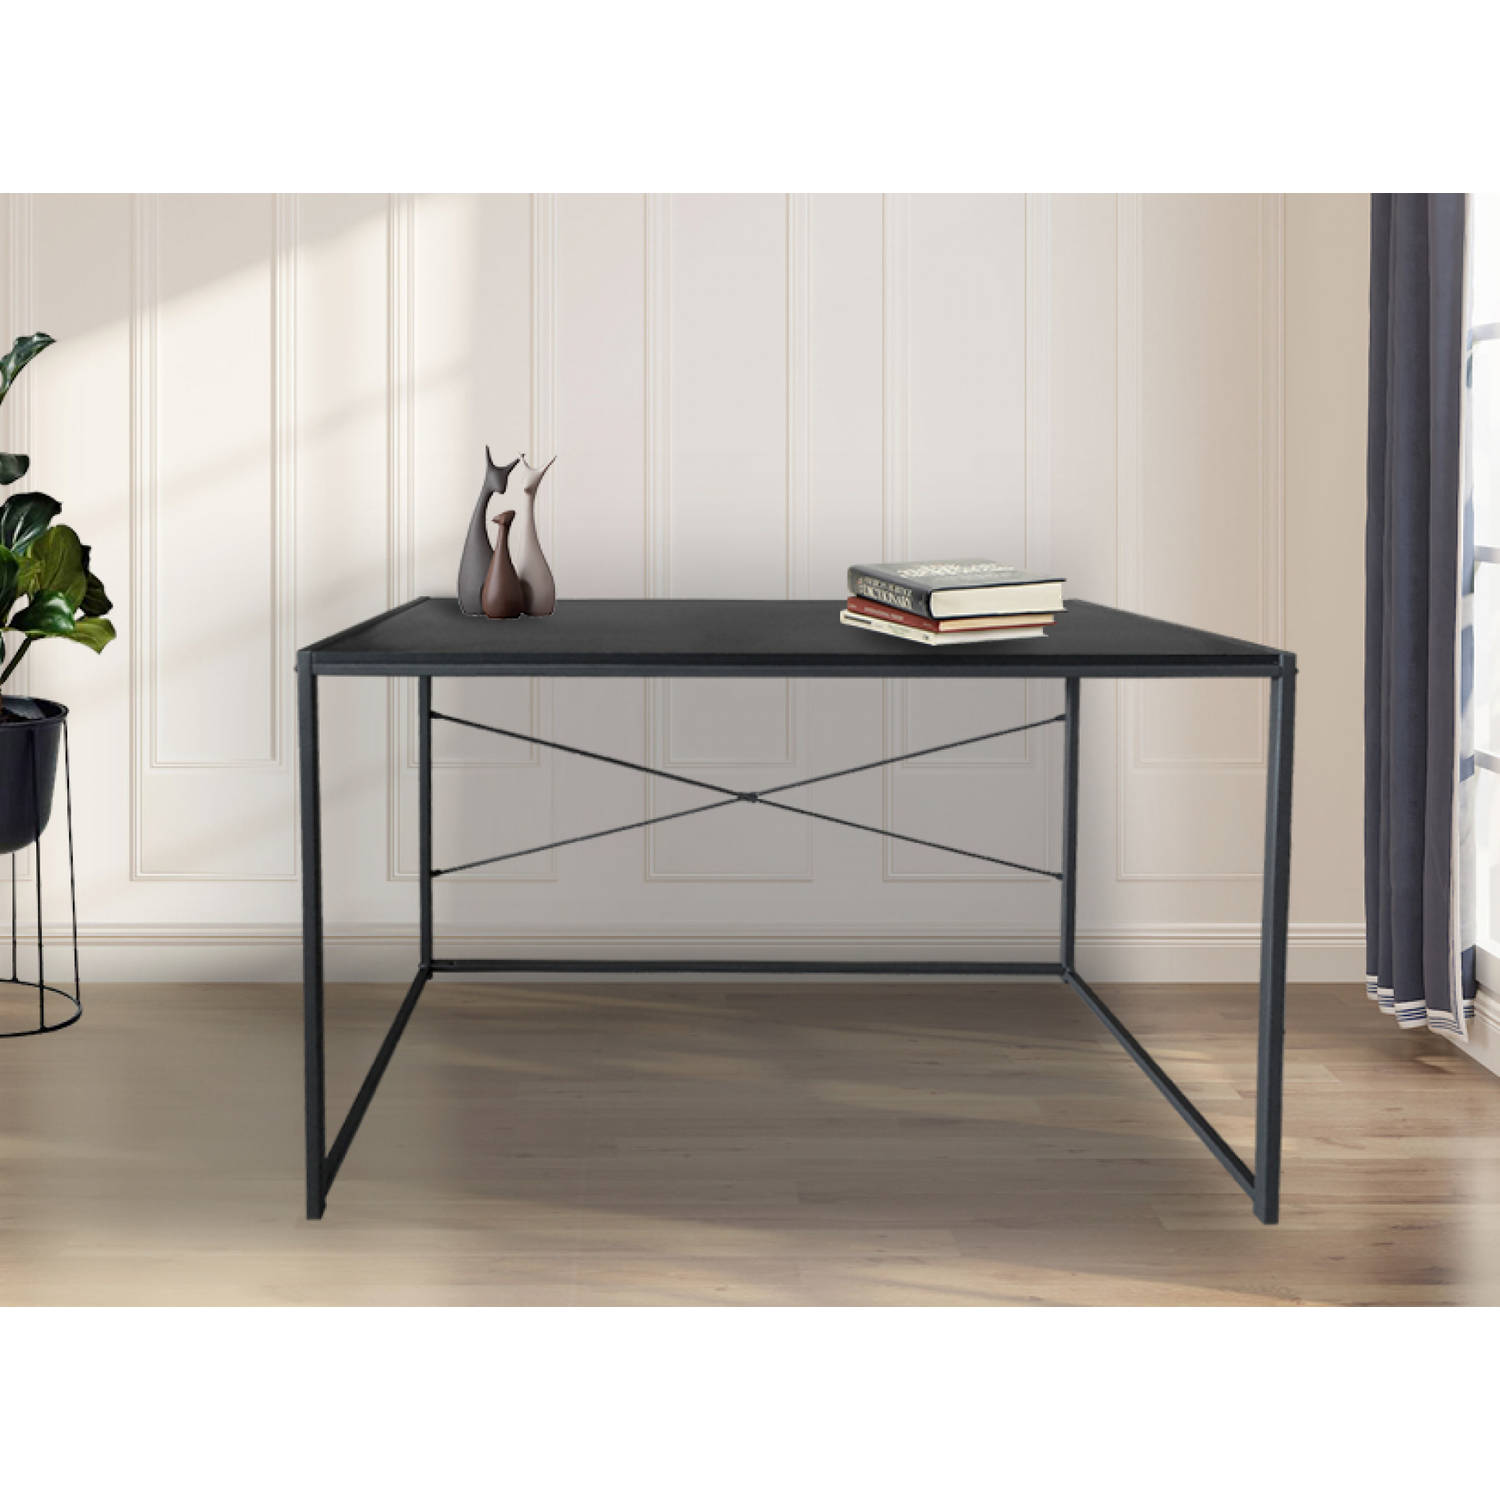 Stoer - computertafel - sidetable - industrieel design 100 cm breed - zwart | Blokker